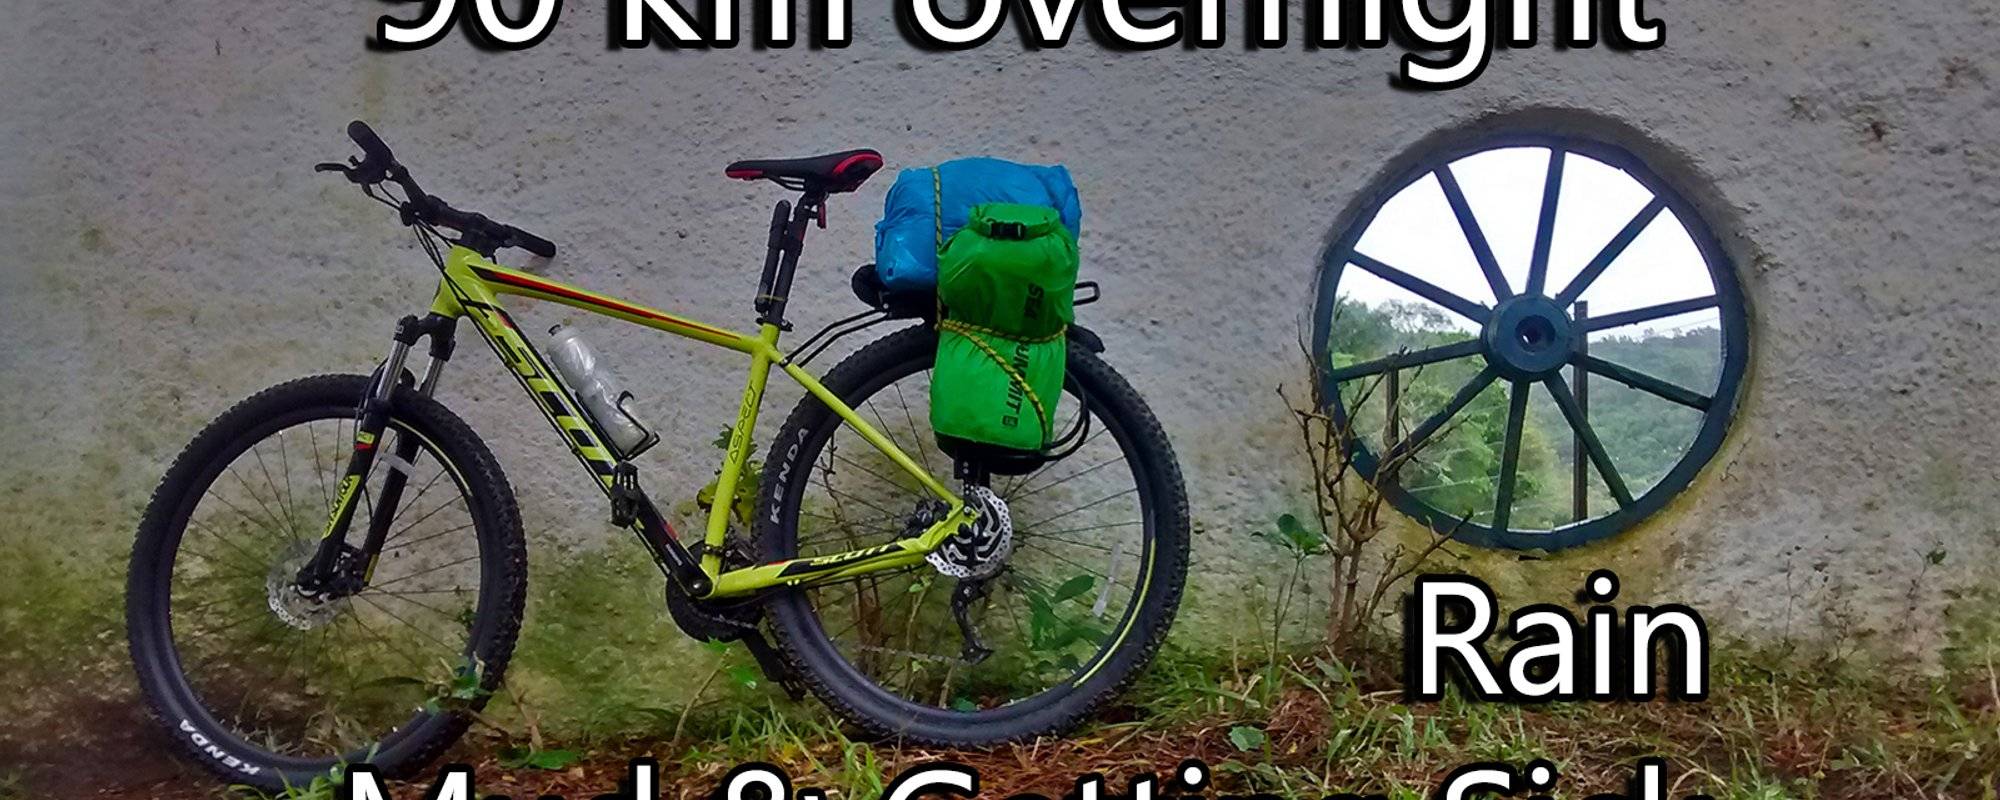 [Blog #20] Rain Cycling Continuation | 90 km overnight | Got Sick